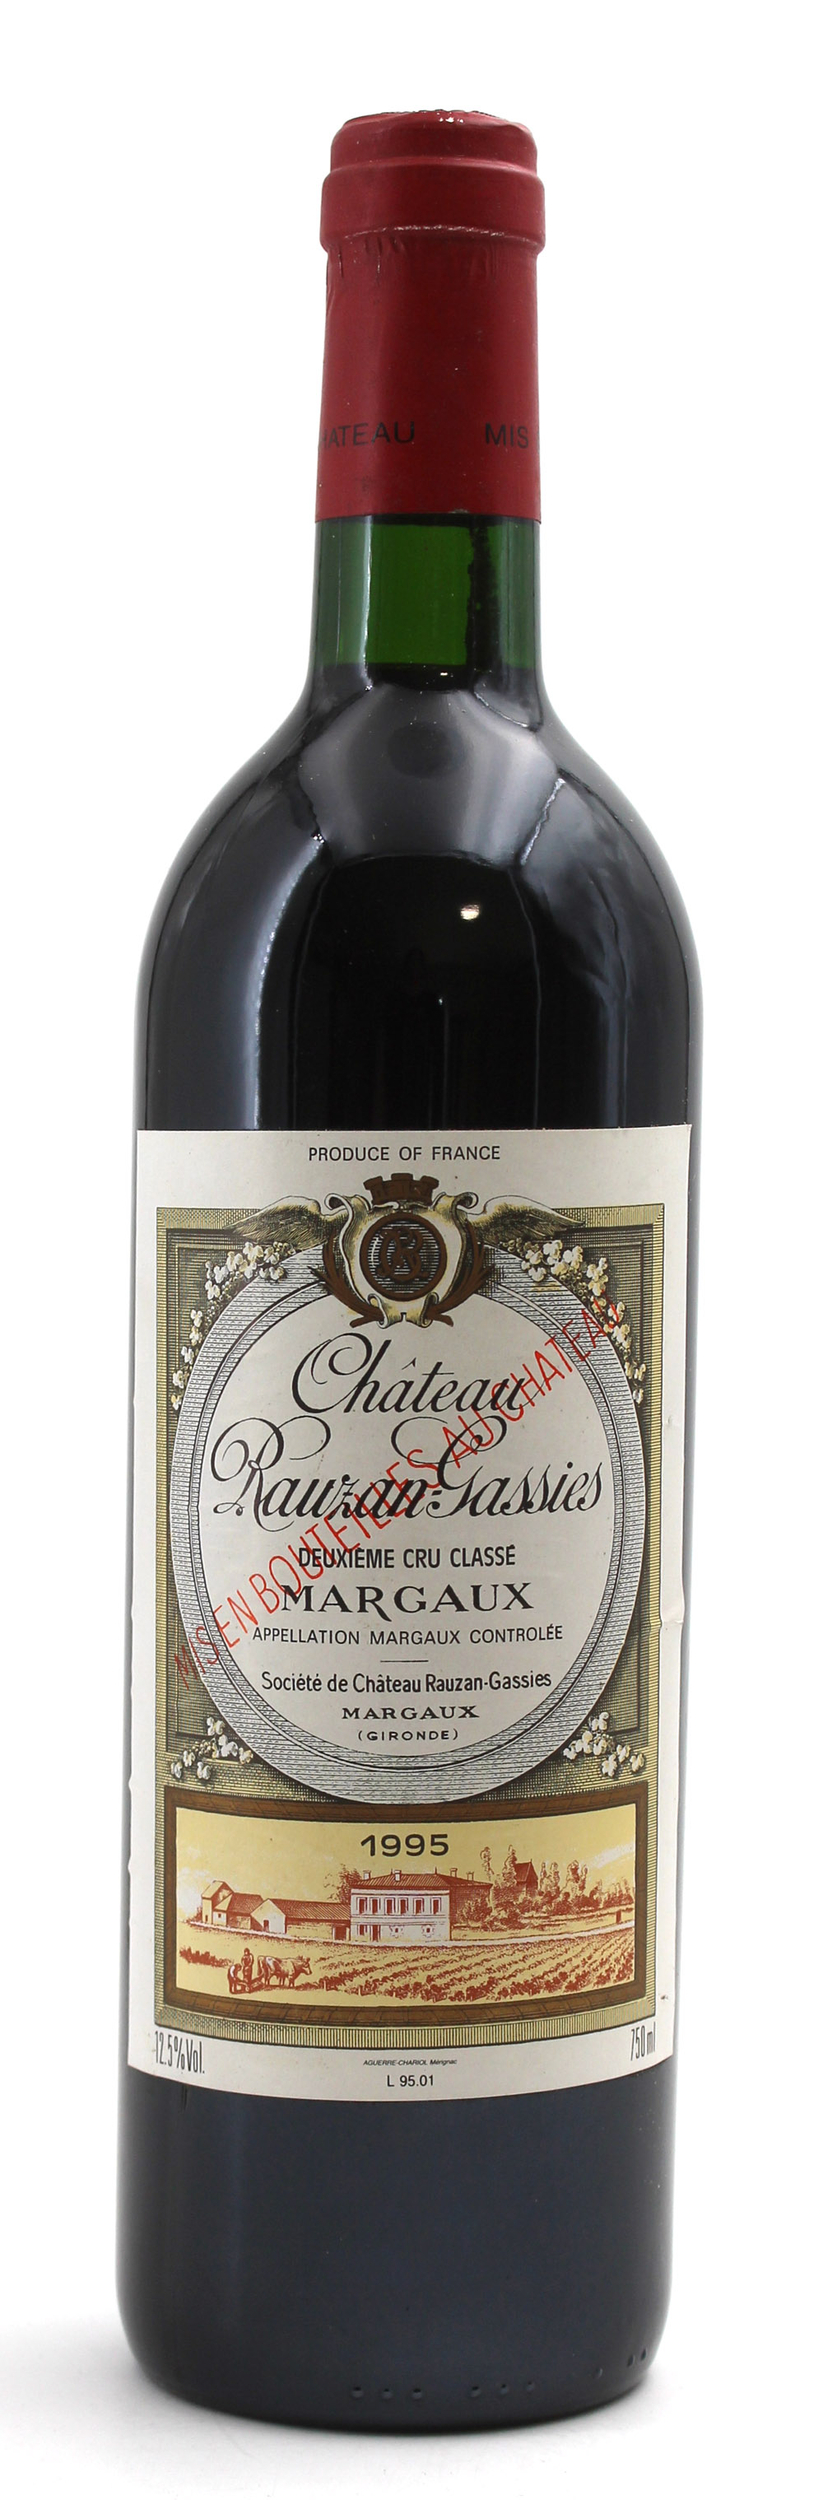 Château Rauzan Gassies 1995 - 75cl AOC Margaux